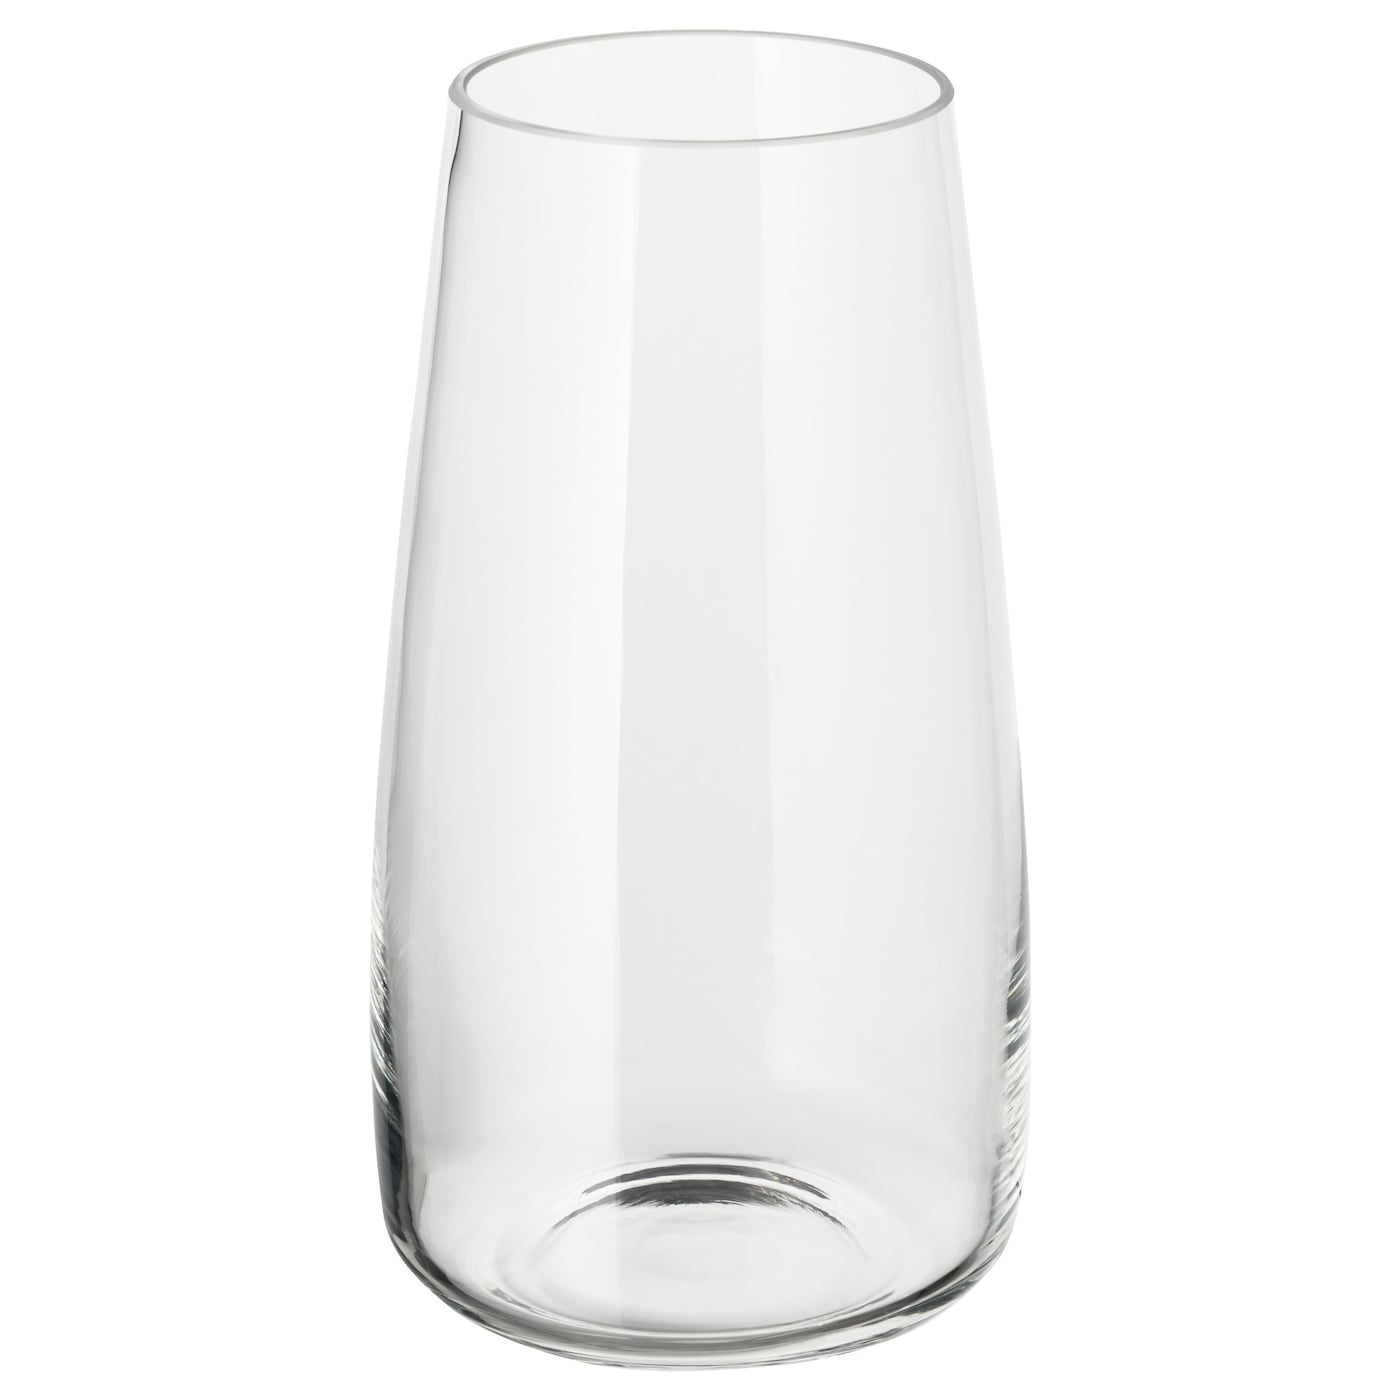 BERÄKNA БЕРЭКНА Ваза, прозрачное стекло, 30 см IKEA 2 шт ваза для творчества деревянная ваза декоративная бутылка для цветов глиняная ваза держатель для цветов